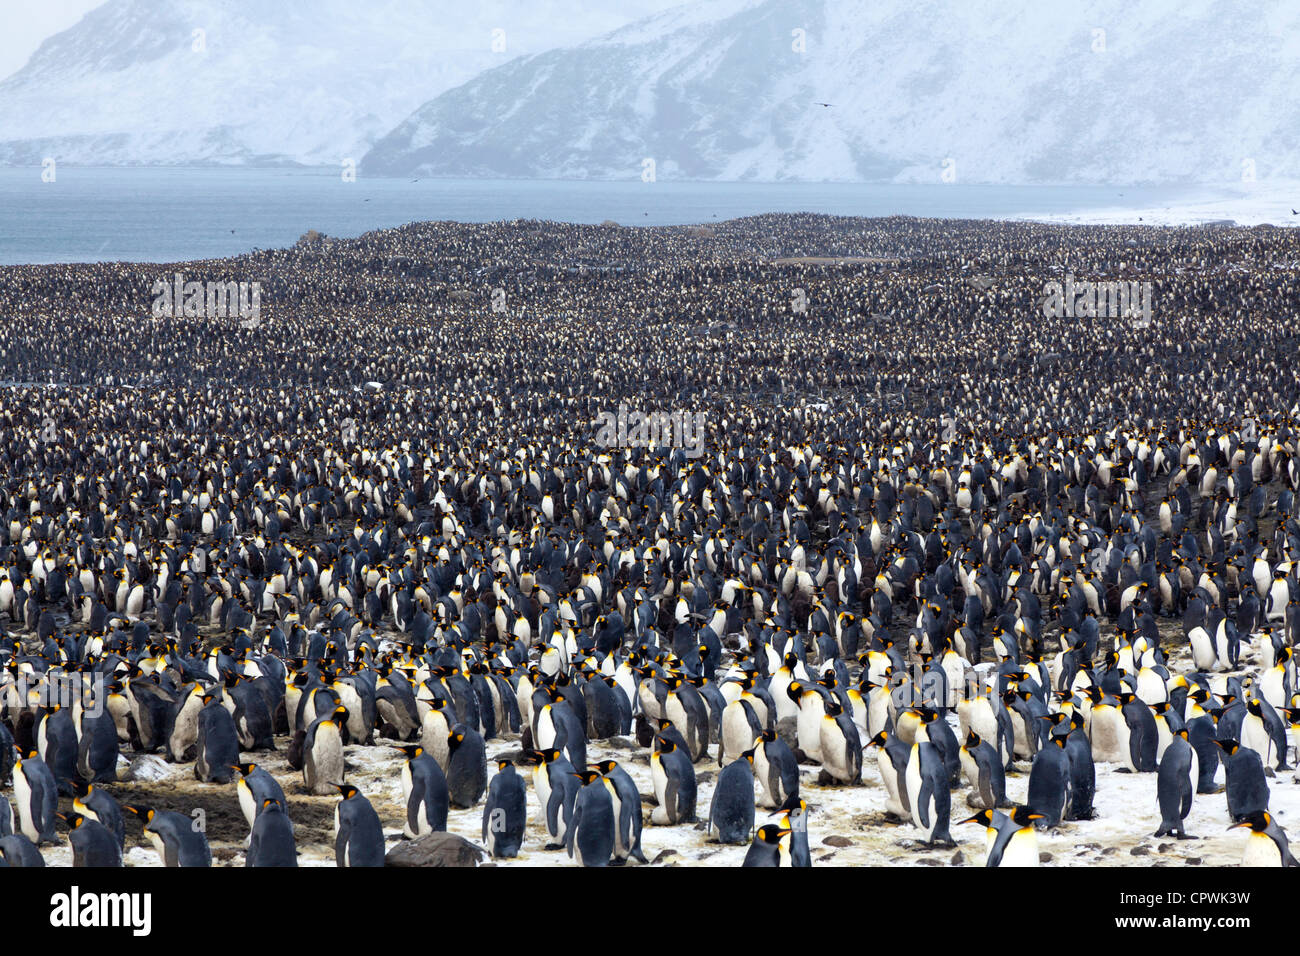 King Penguin colony at St Andrew's Bay, South Georgia Island Stock Photo